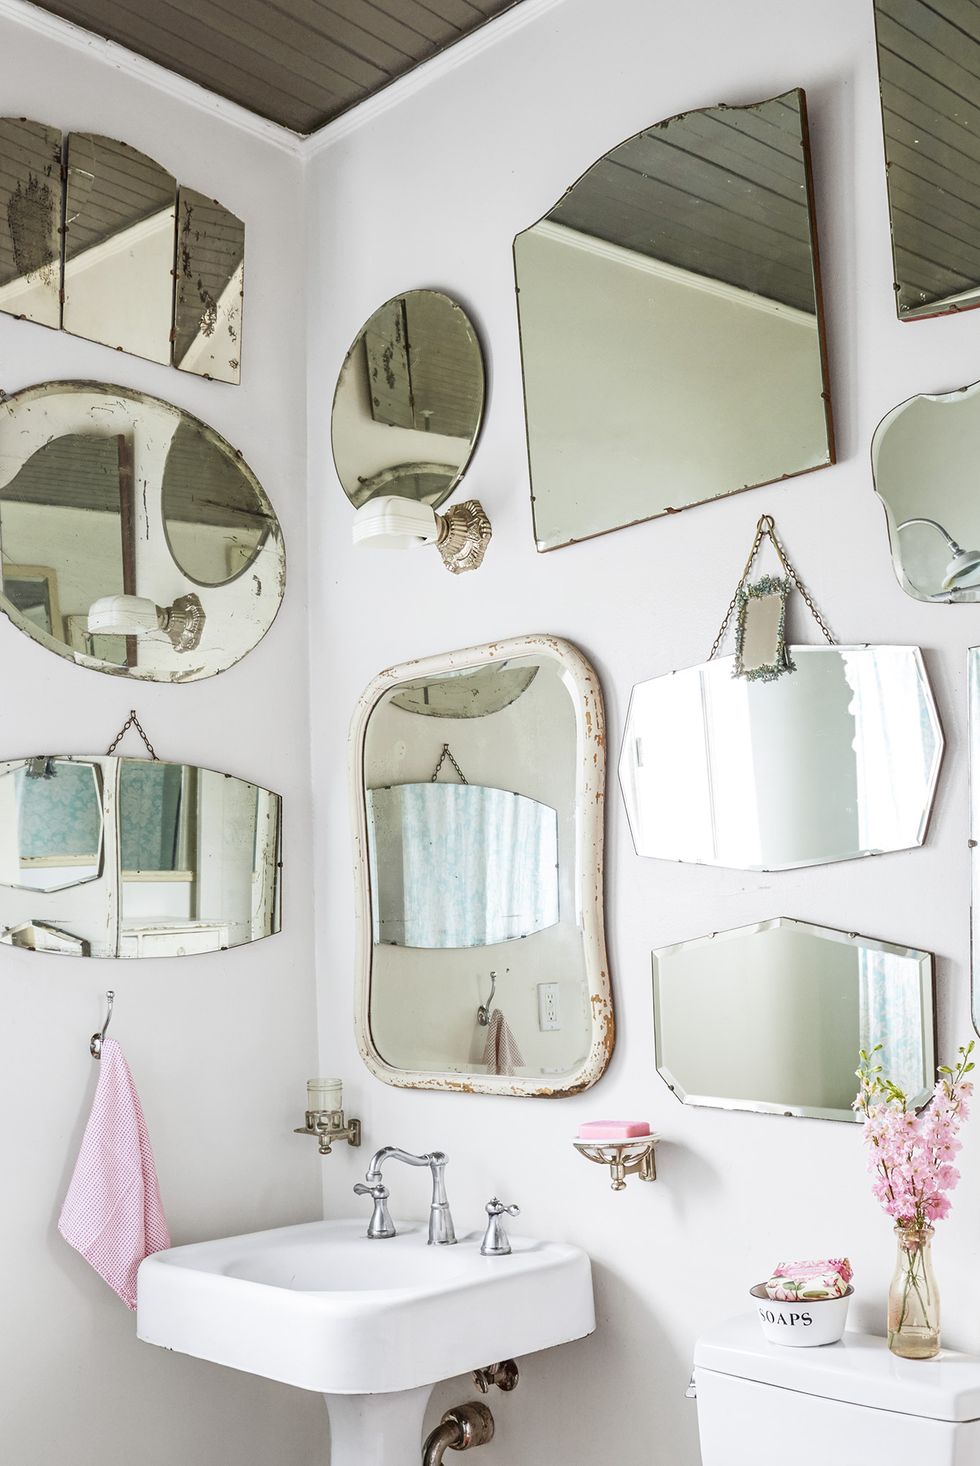 How do I mount a few shelves on a bathroom mirror?